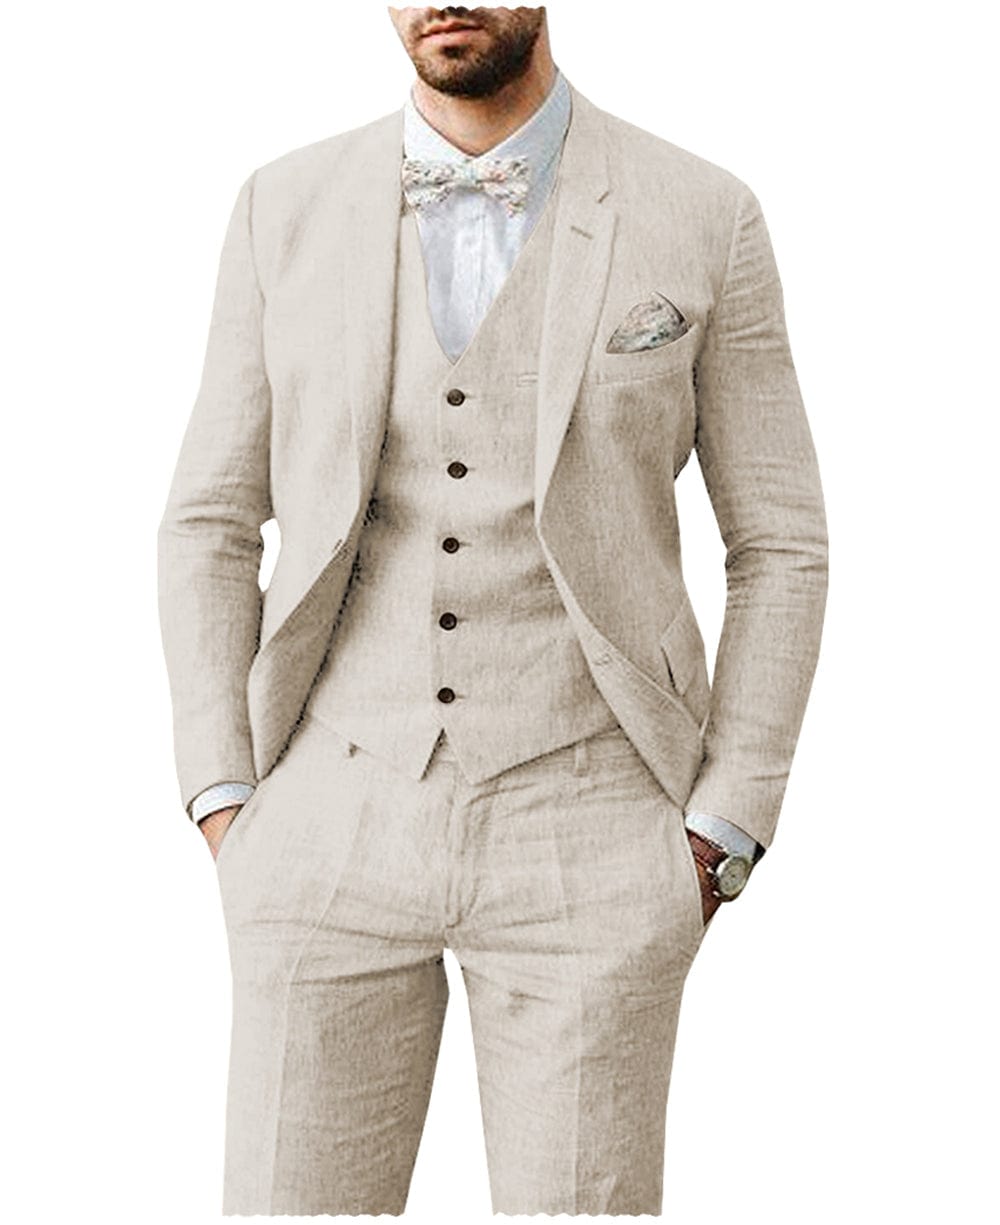 Buy MY'S Men's 3 Piece Suit Blazer Slim Fit One Button Notch Lapel Dress  Business Wedding Party Jacket Vest Pants & Tie Set Light Grey at Amazon.in